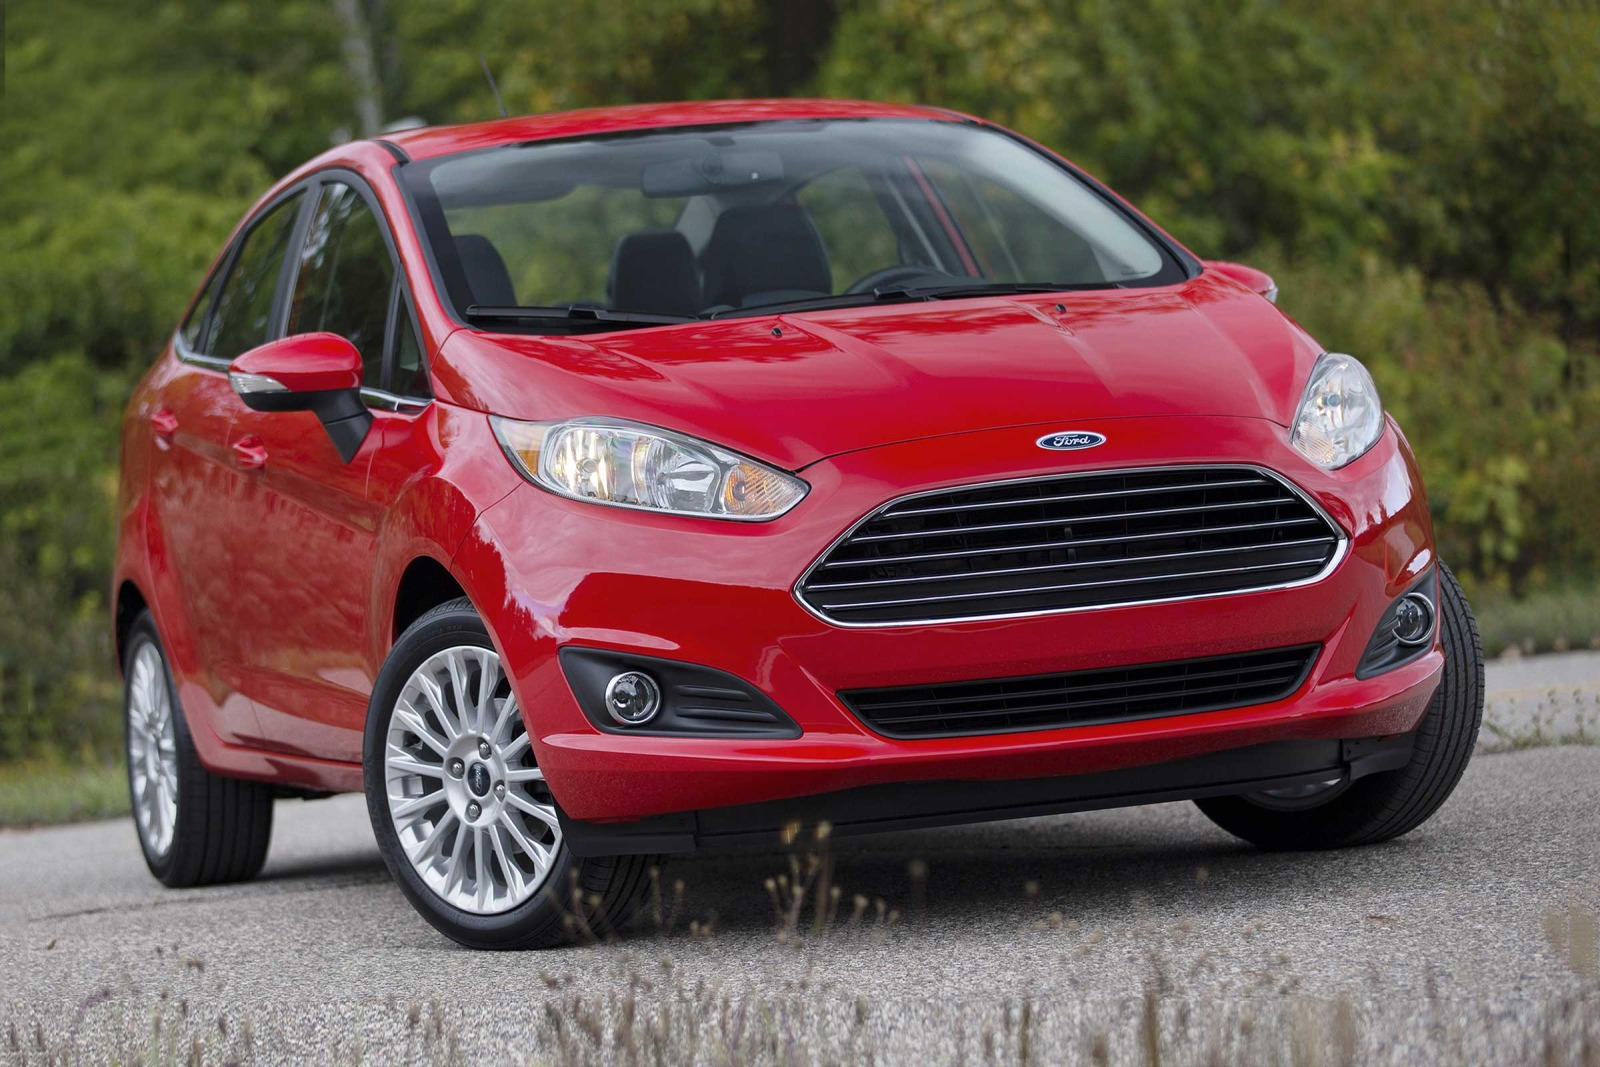 Ford Fiesta Sedan: Models, Generations and Details